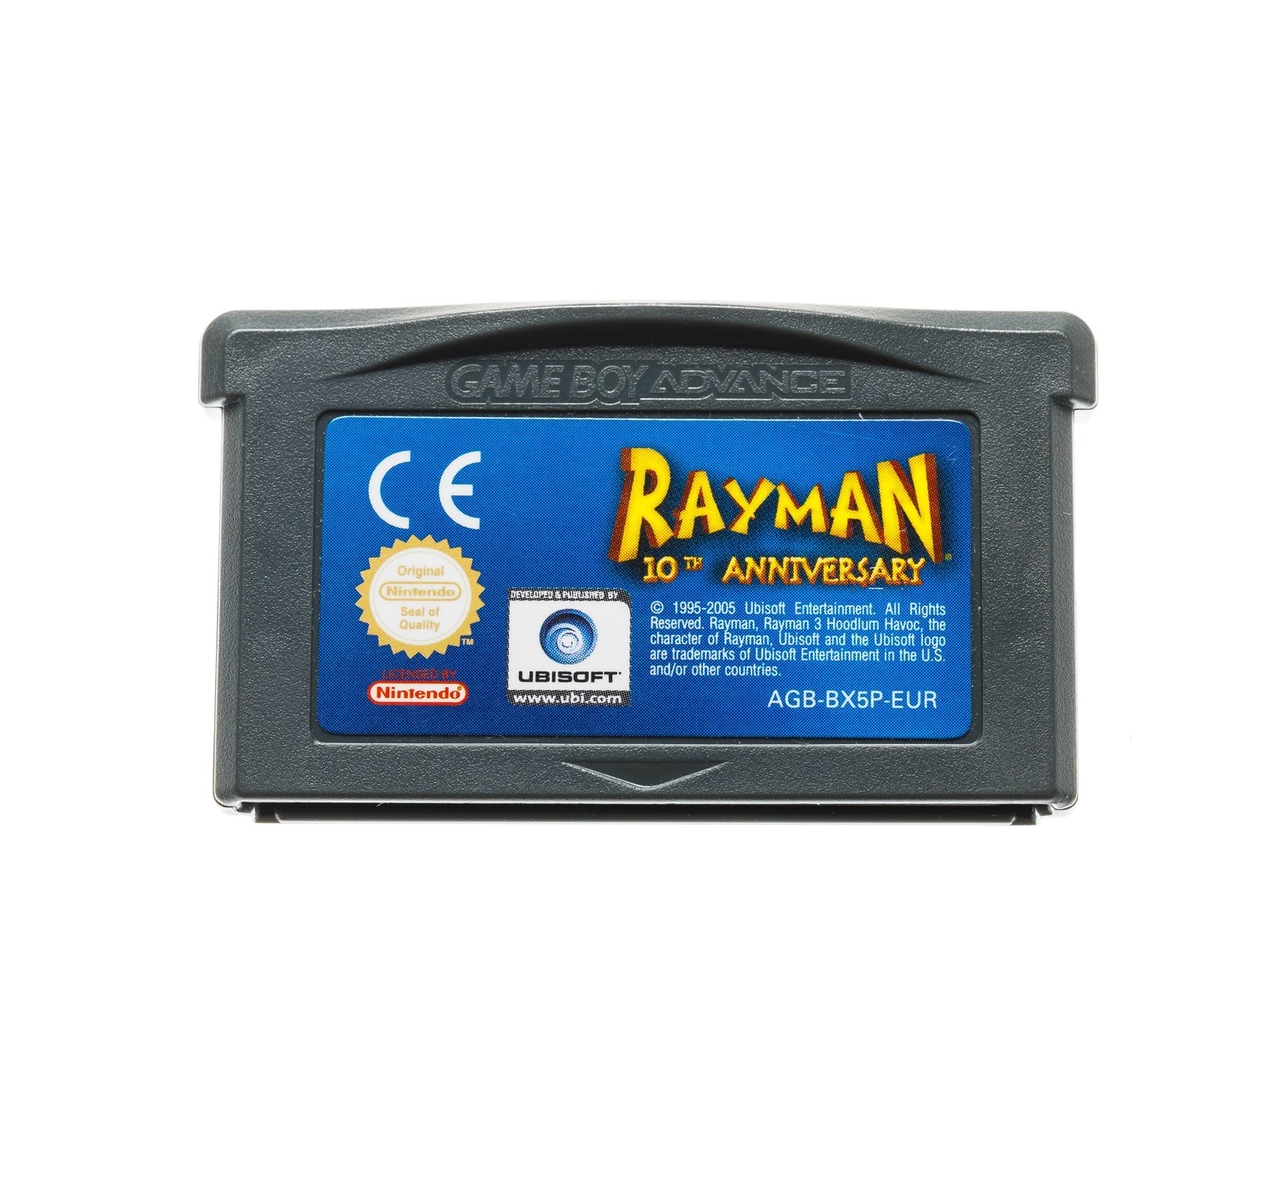 Rayman 10th Anniversary Kopen | Gameboy Advance Games